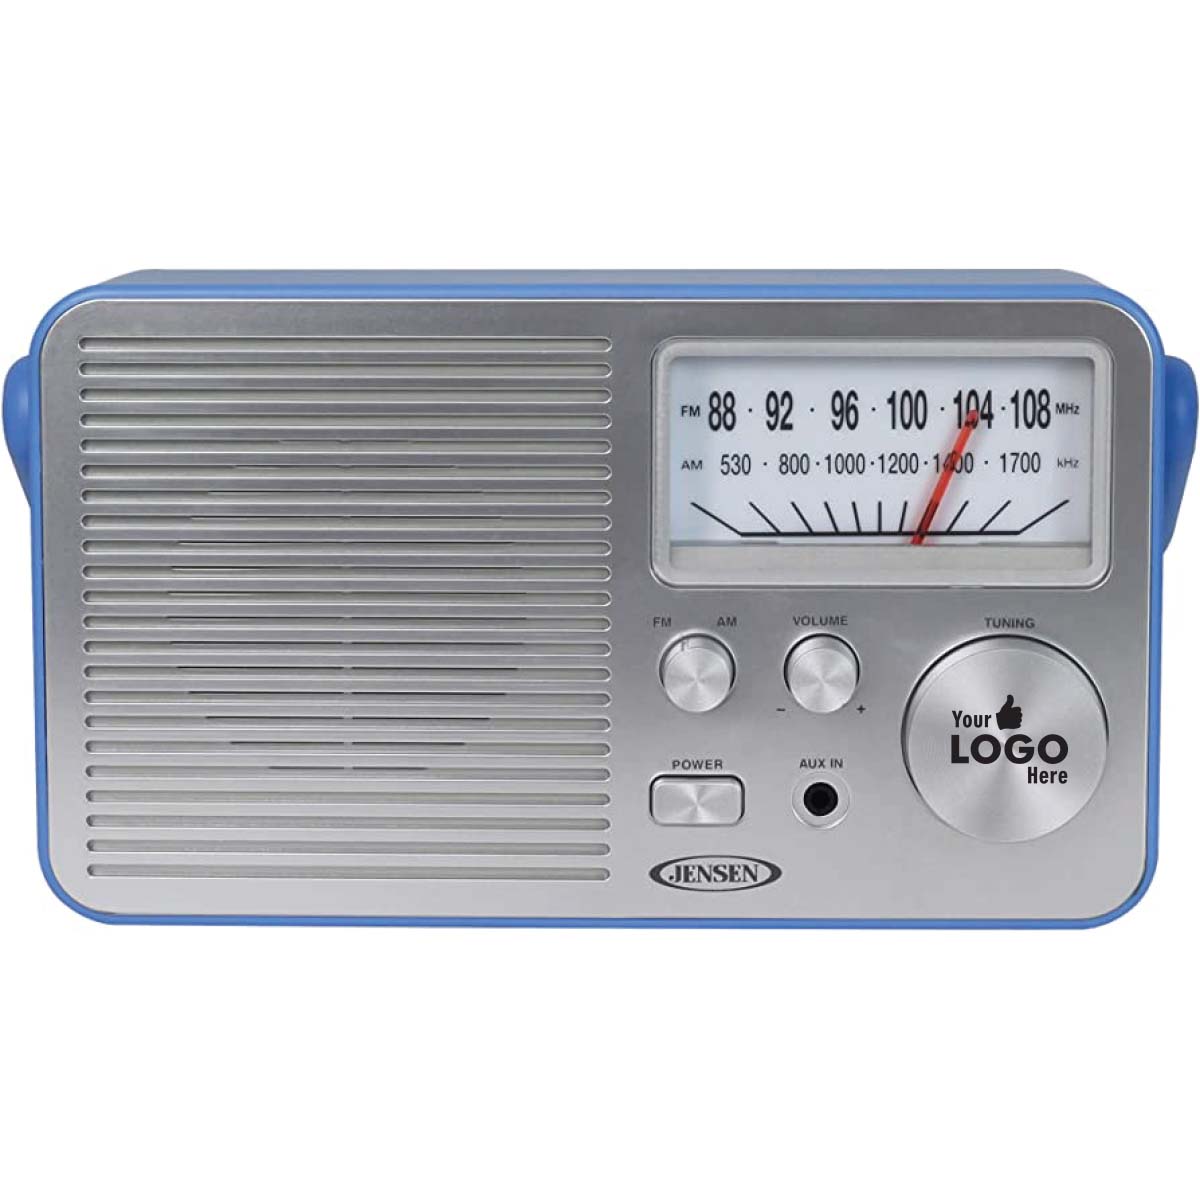 
                  
                    Jensen Audio Portable AM/FM Radio
                  
                